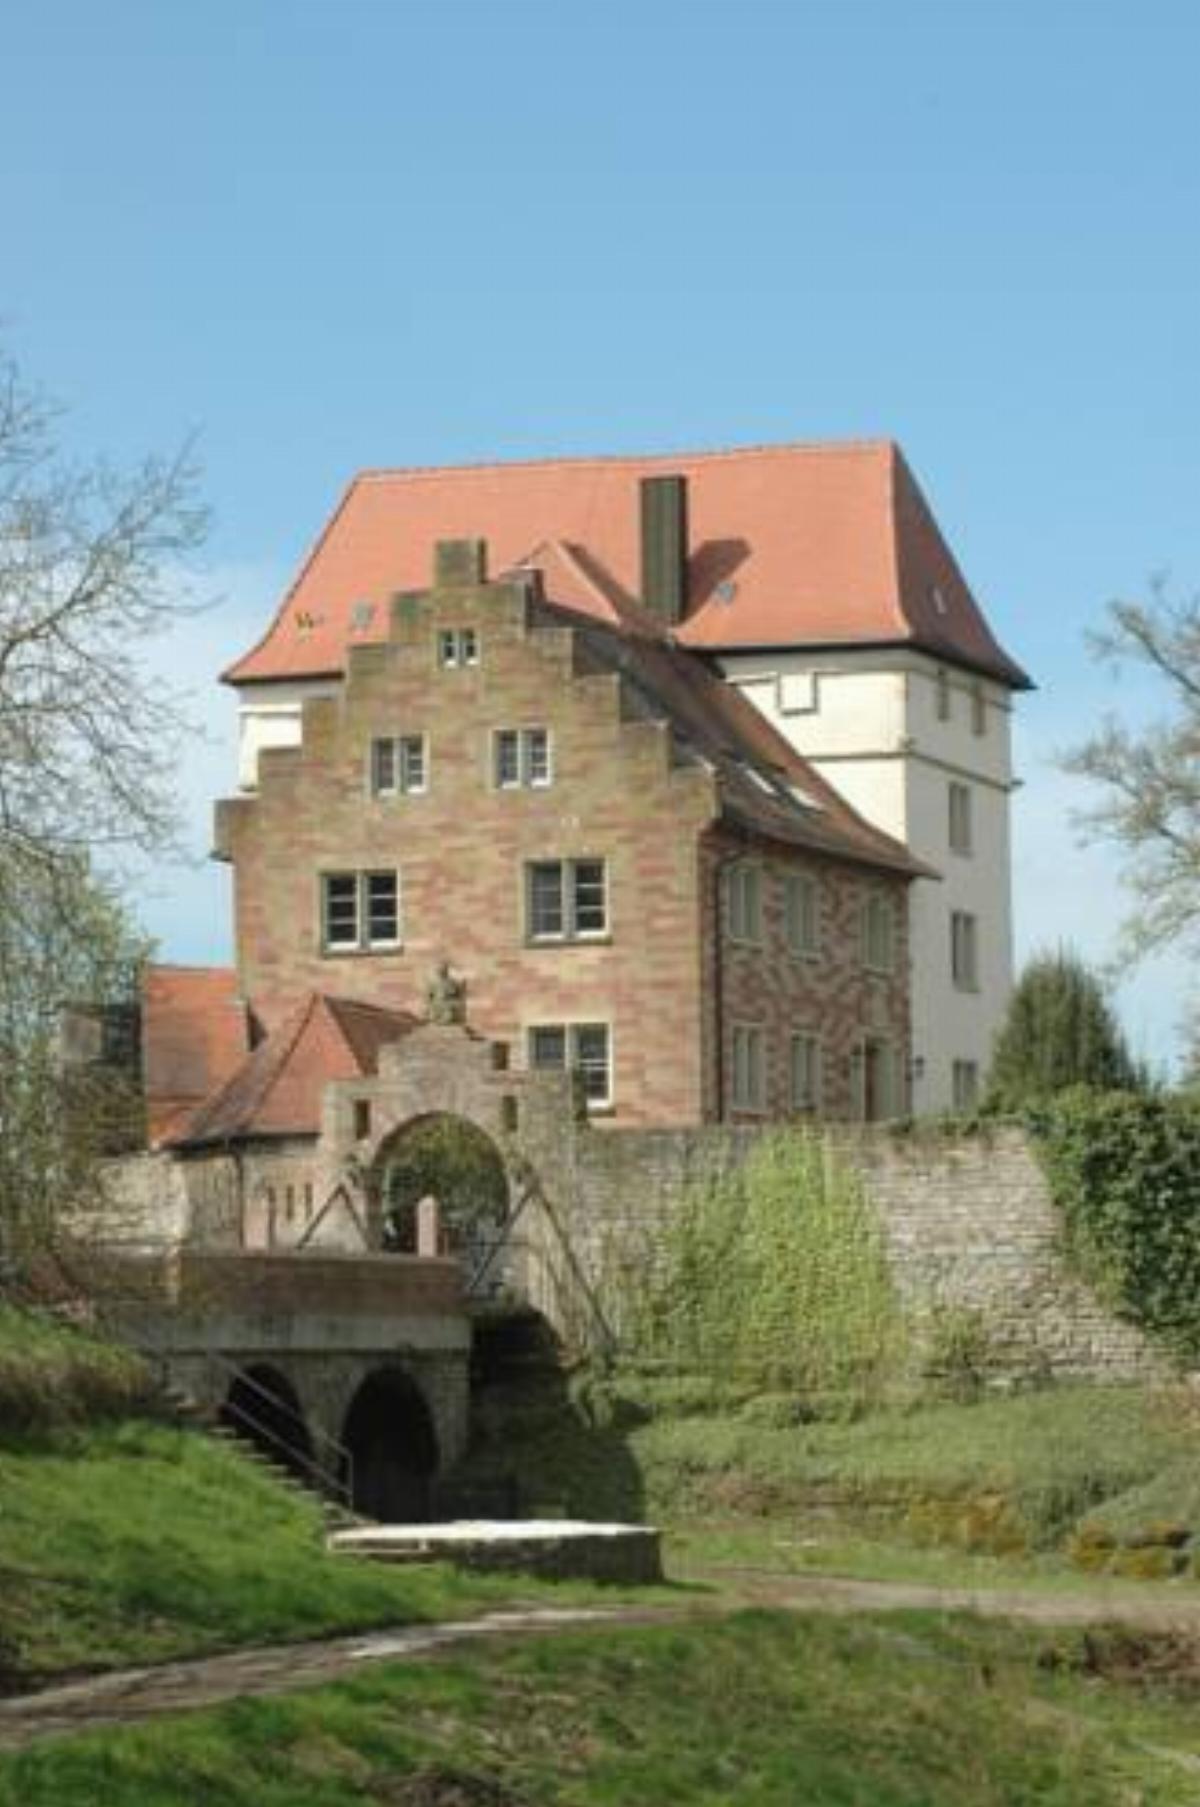 Schloss Neuburg